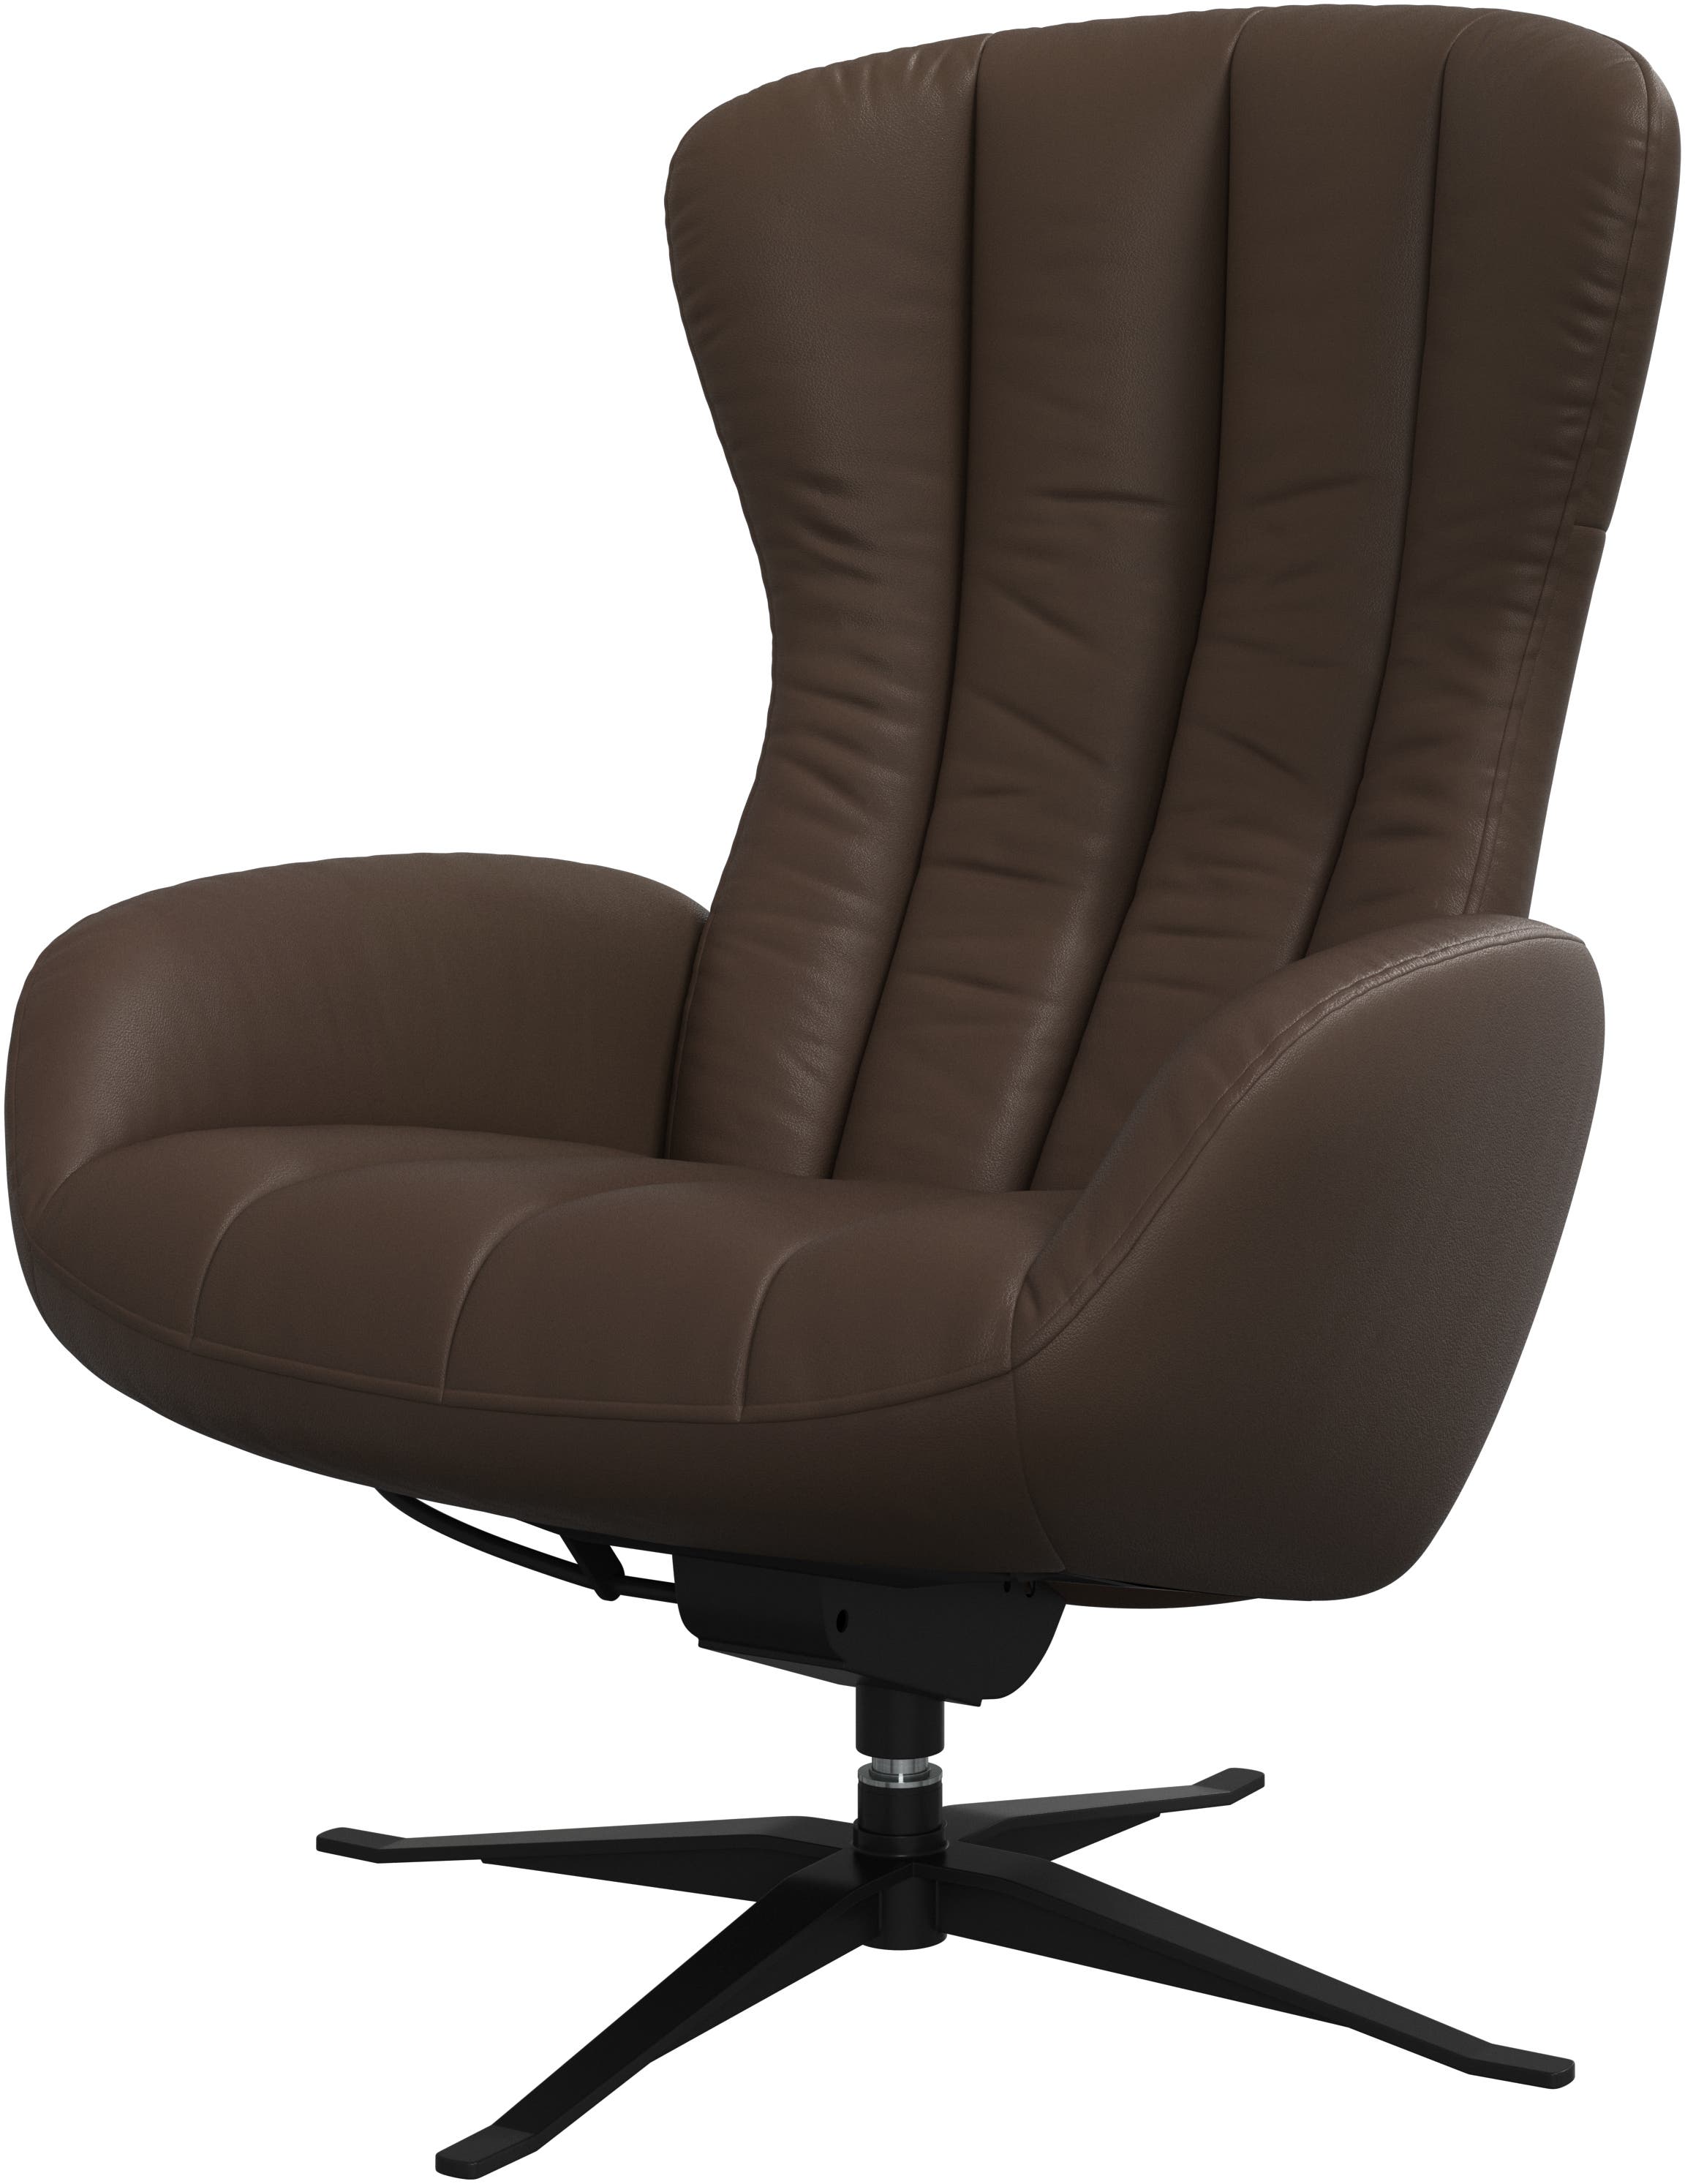 Tilburg living chair with tilt and swivel function